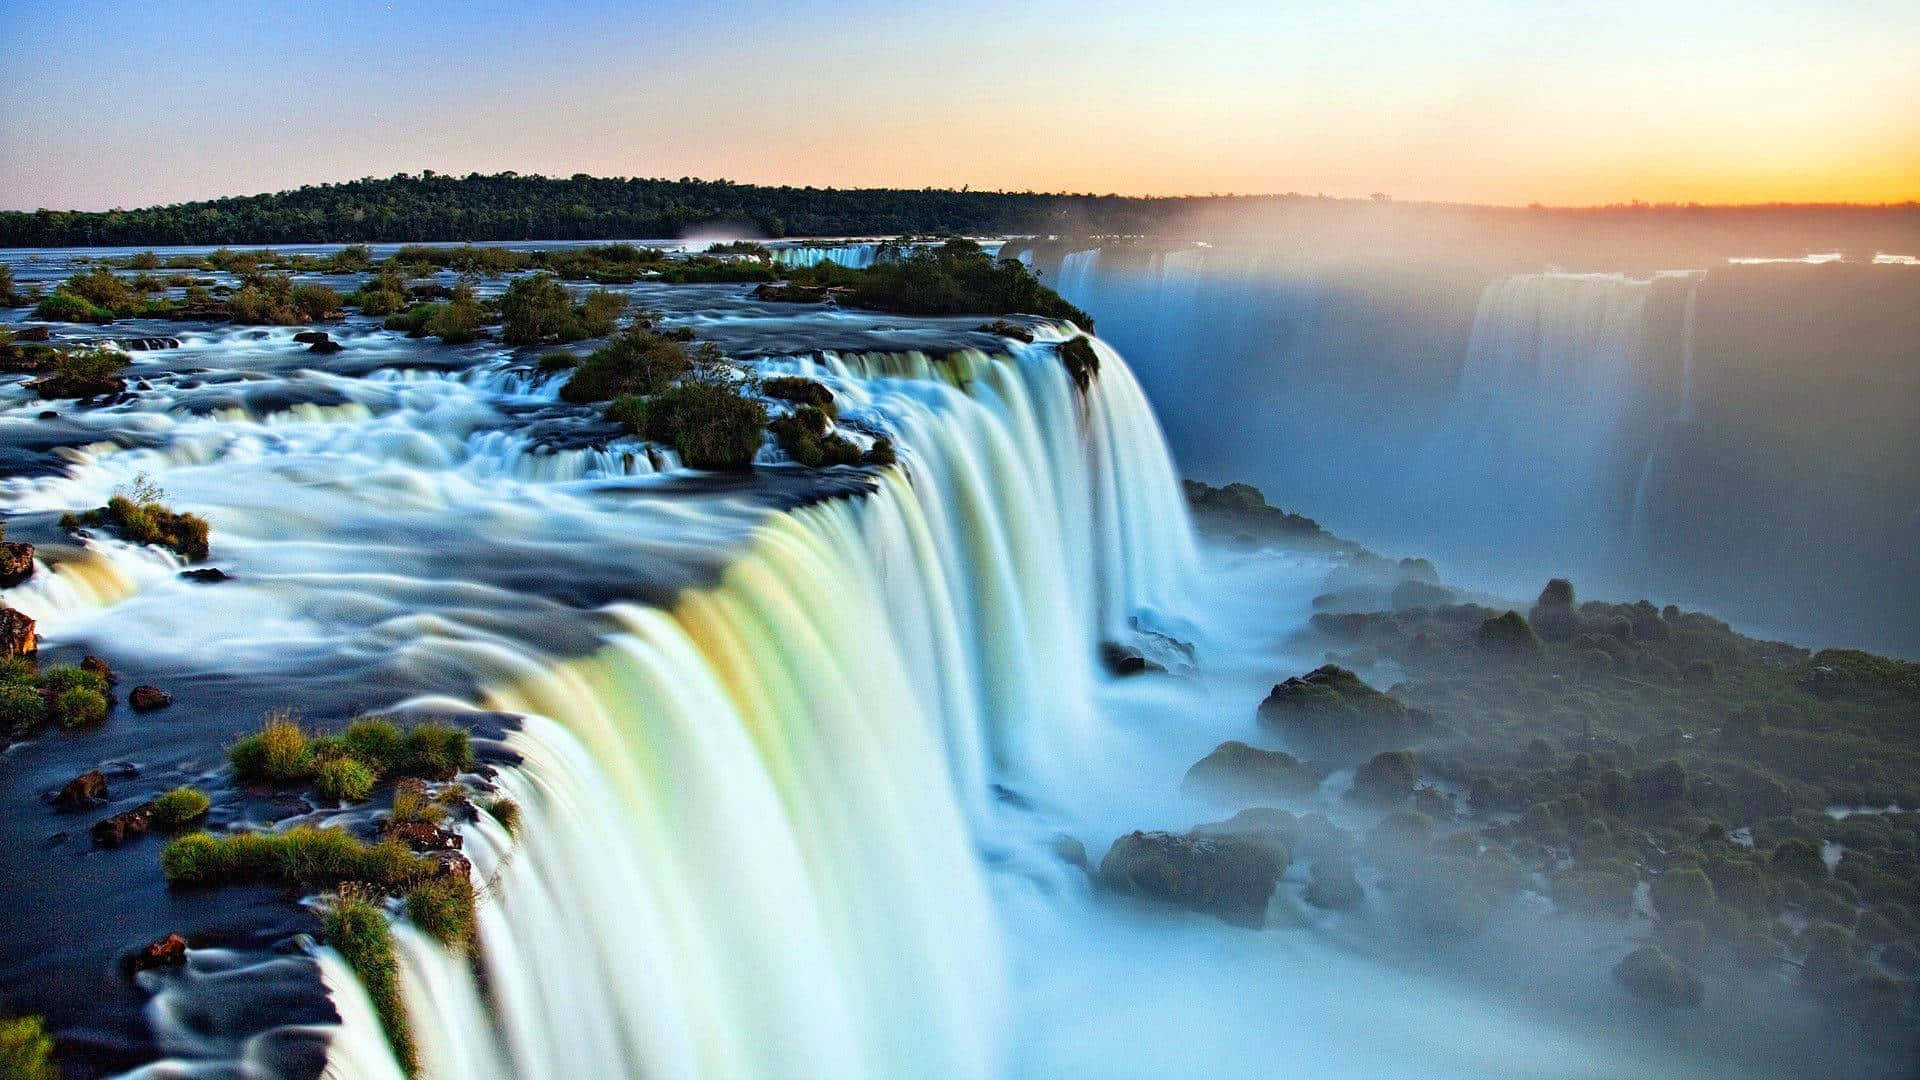 The majestic beauty of the Niagara Falls